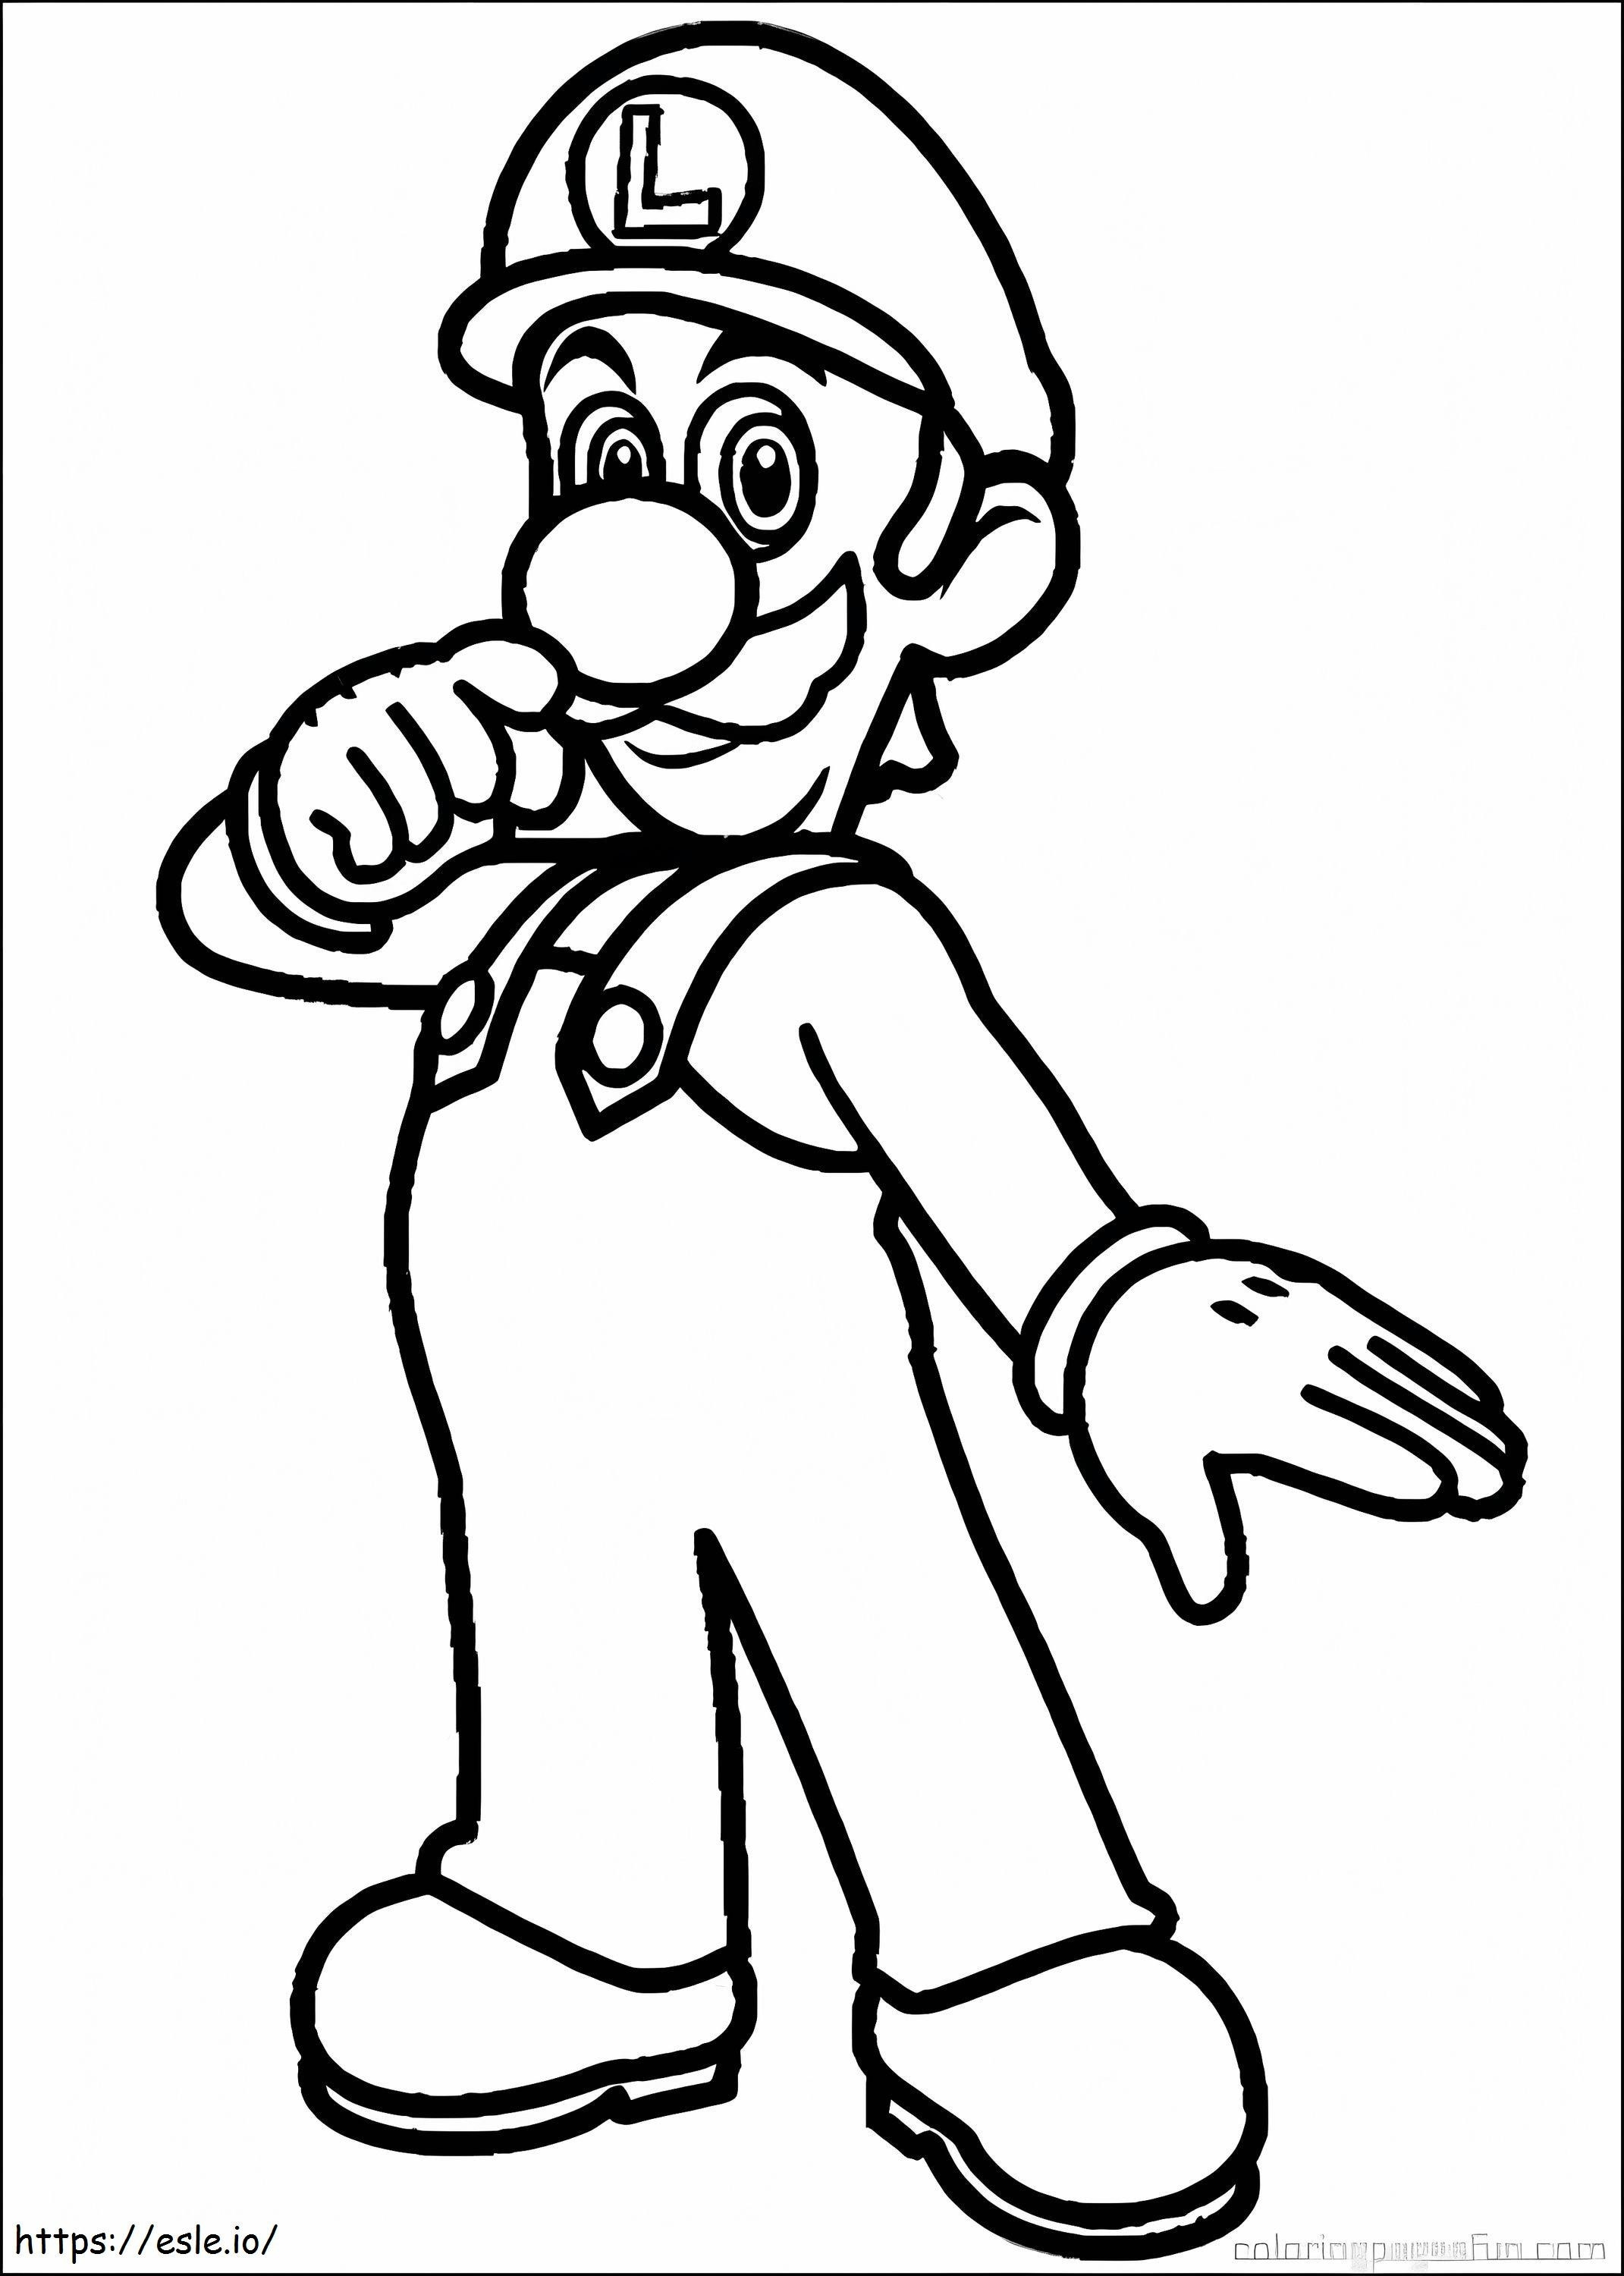 Impressive Luigi coloring page